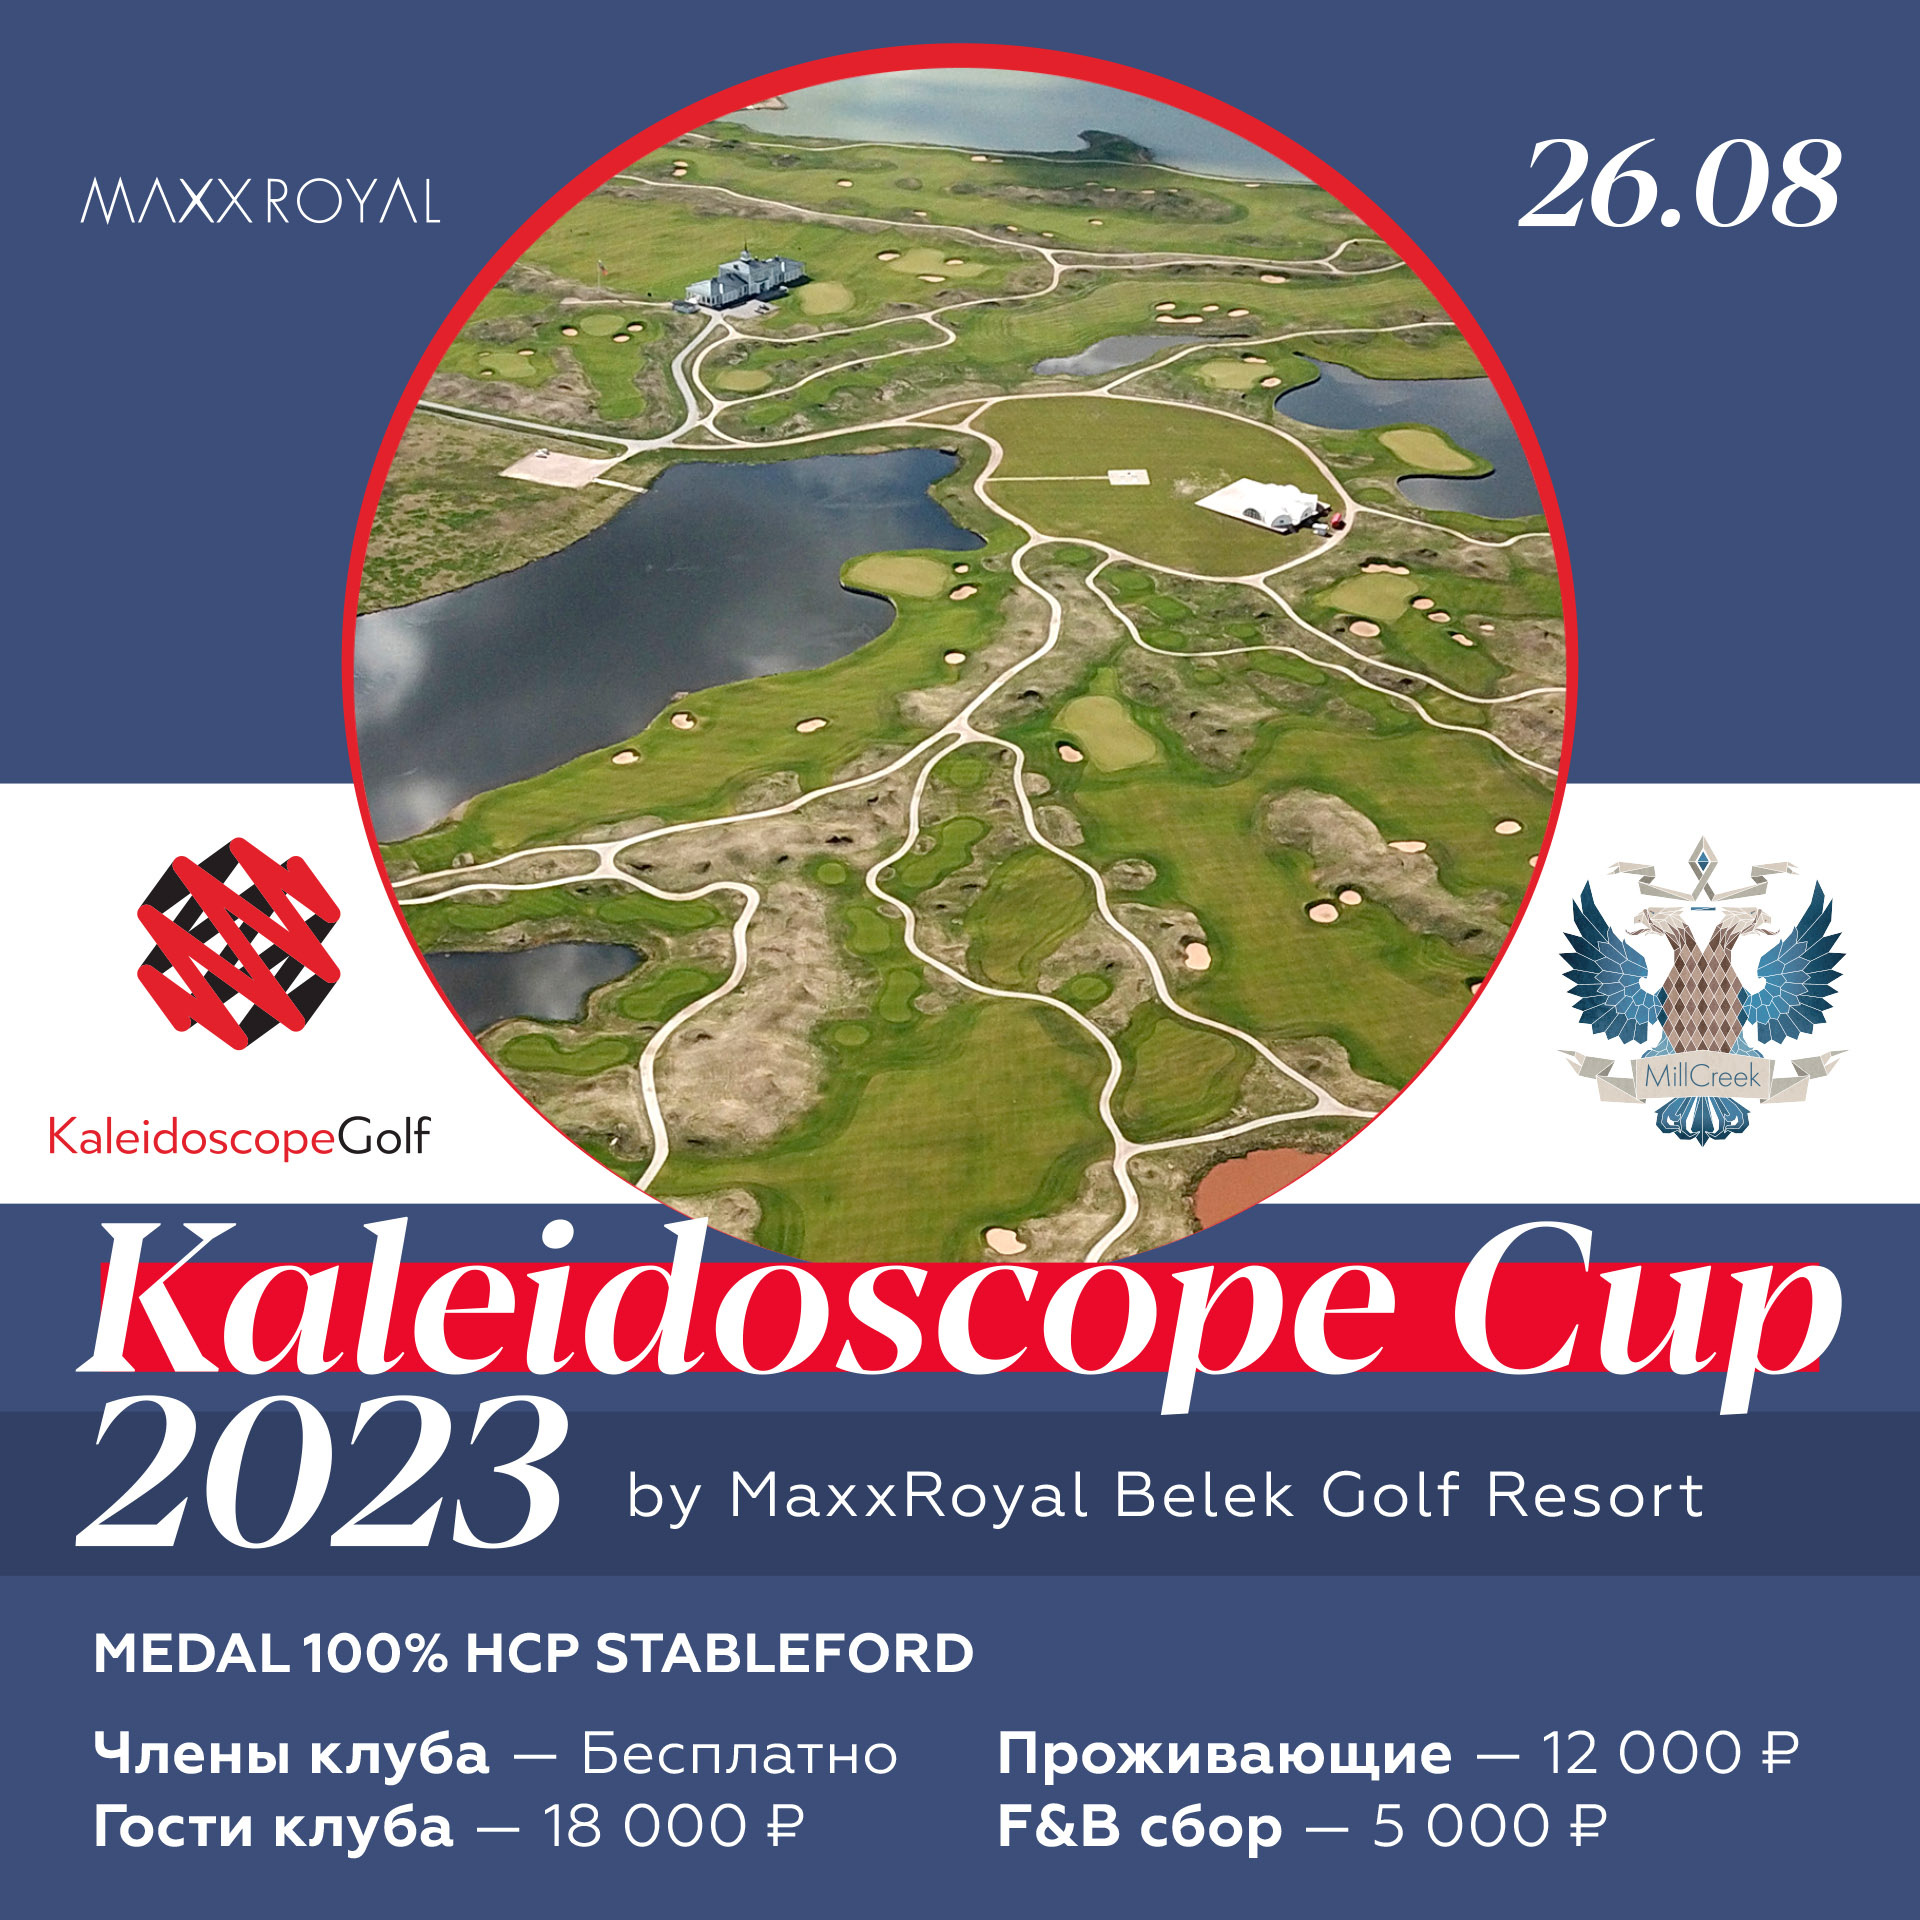 KaleidoscopeCup 2023 by MaxxRoyal Belek Golf Resort